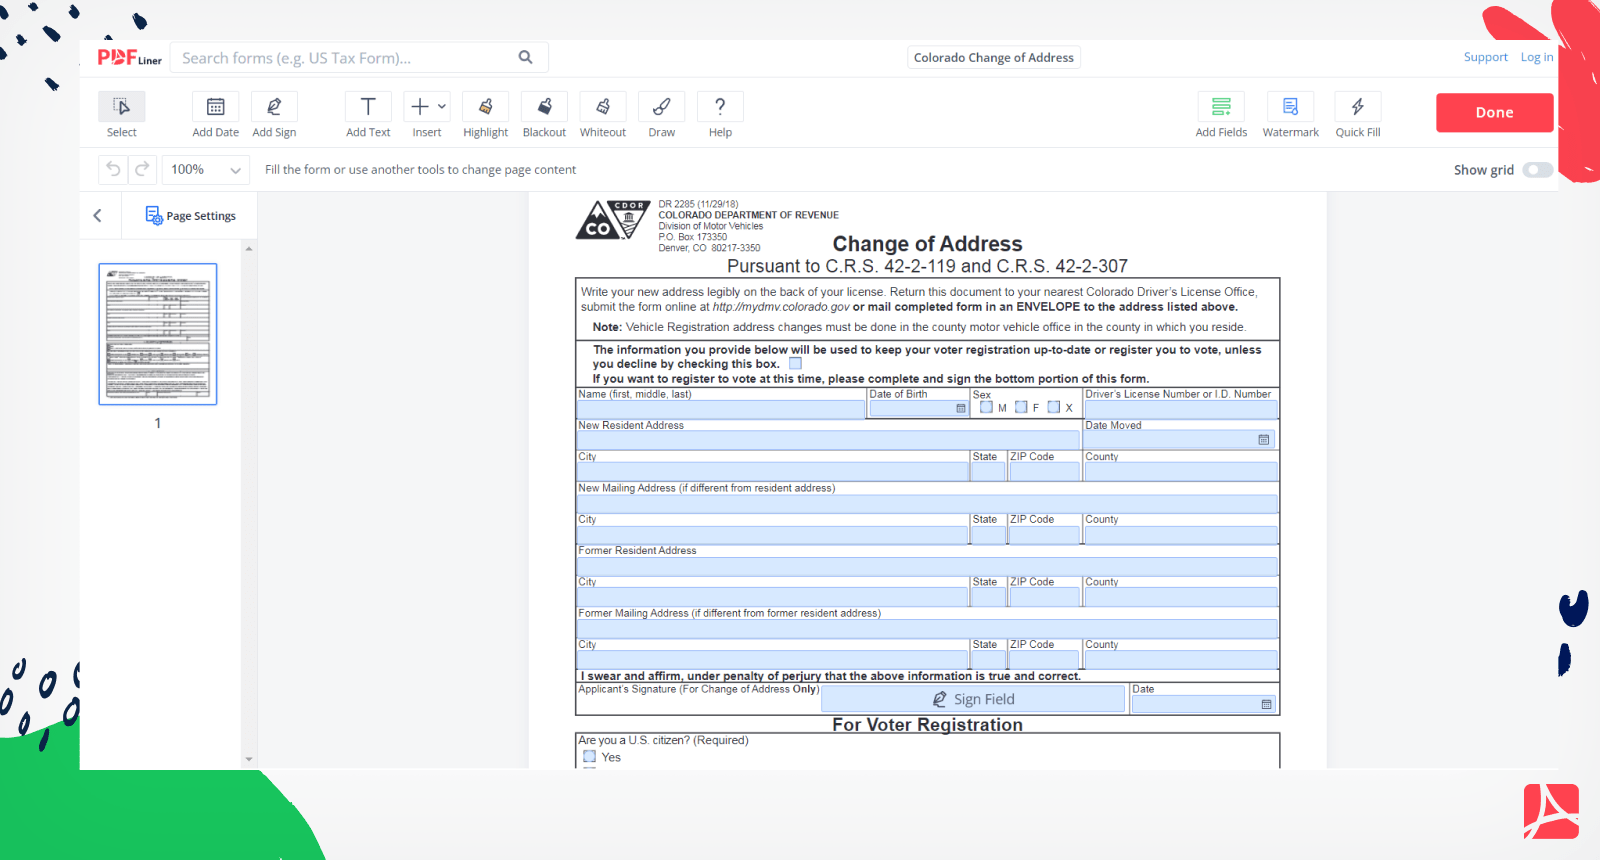 Colorado Change of Address Form Screenshot